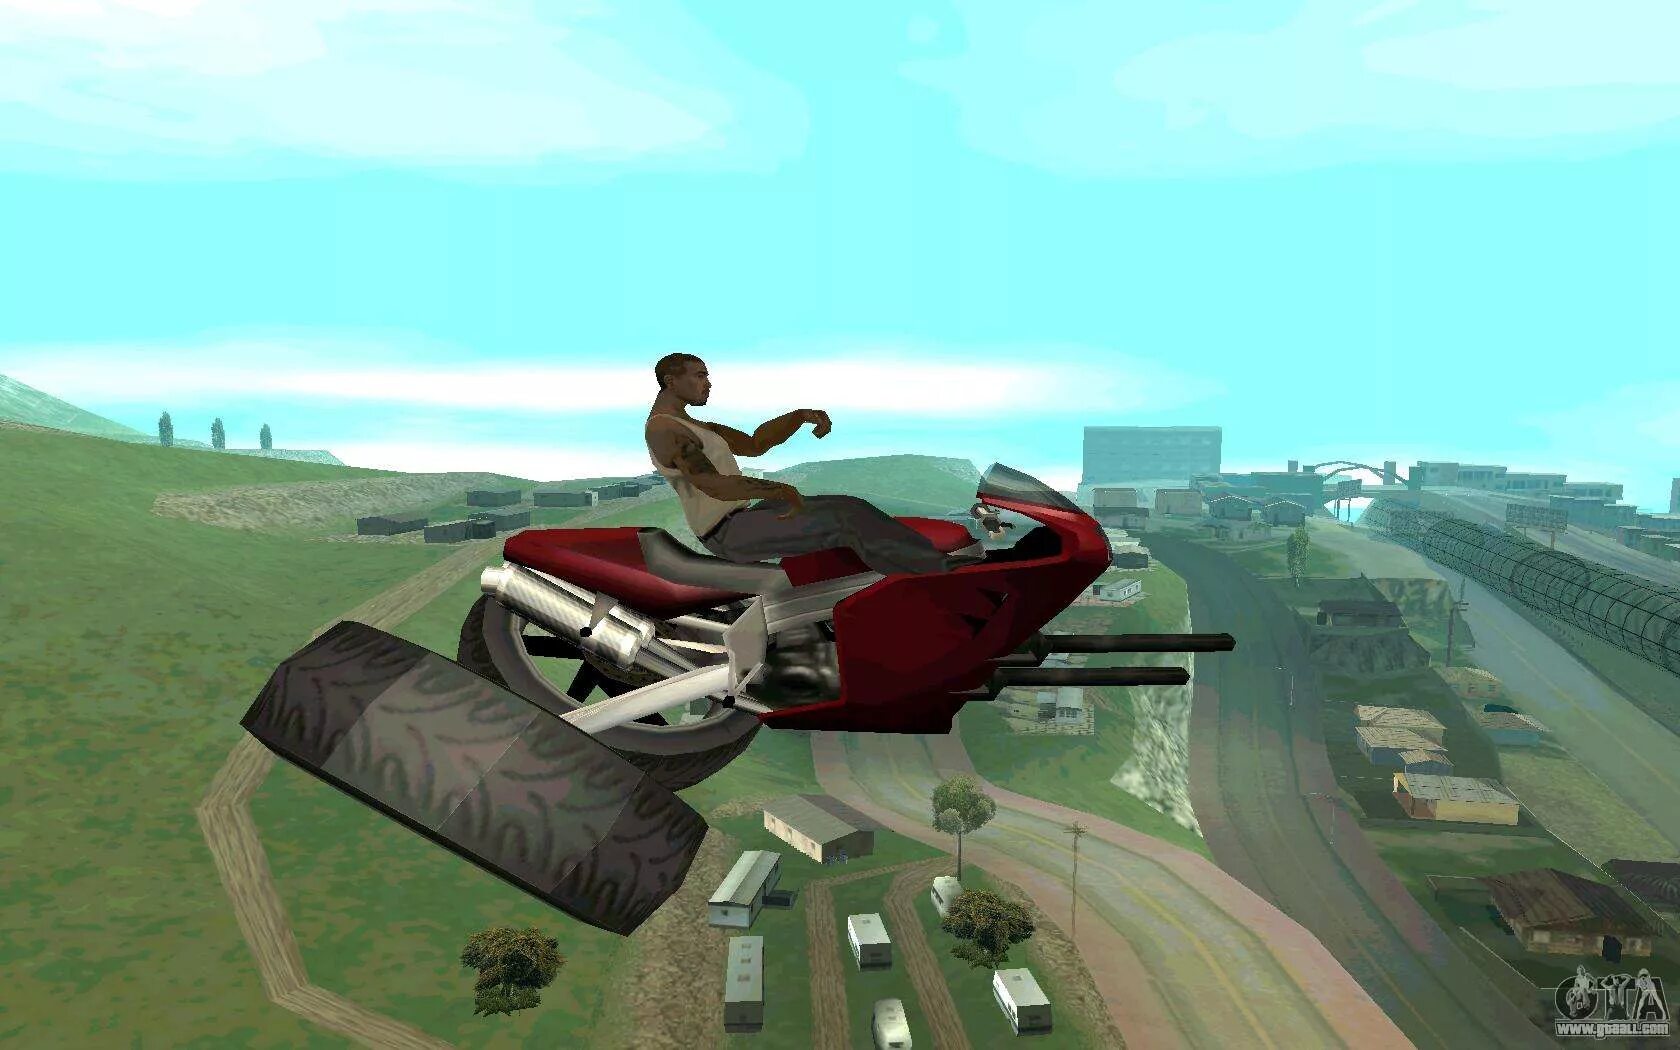 Игра мотоциклы гта. Летающий мотоцикл GTA sa. GTA 5 летающий мотоцикл. Код на Сан андреас на летающие мотоциклы. Код в ГТА на летающий мотоцикл.